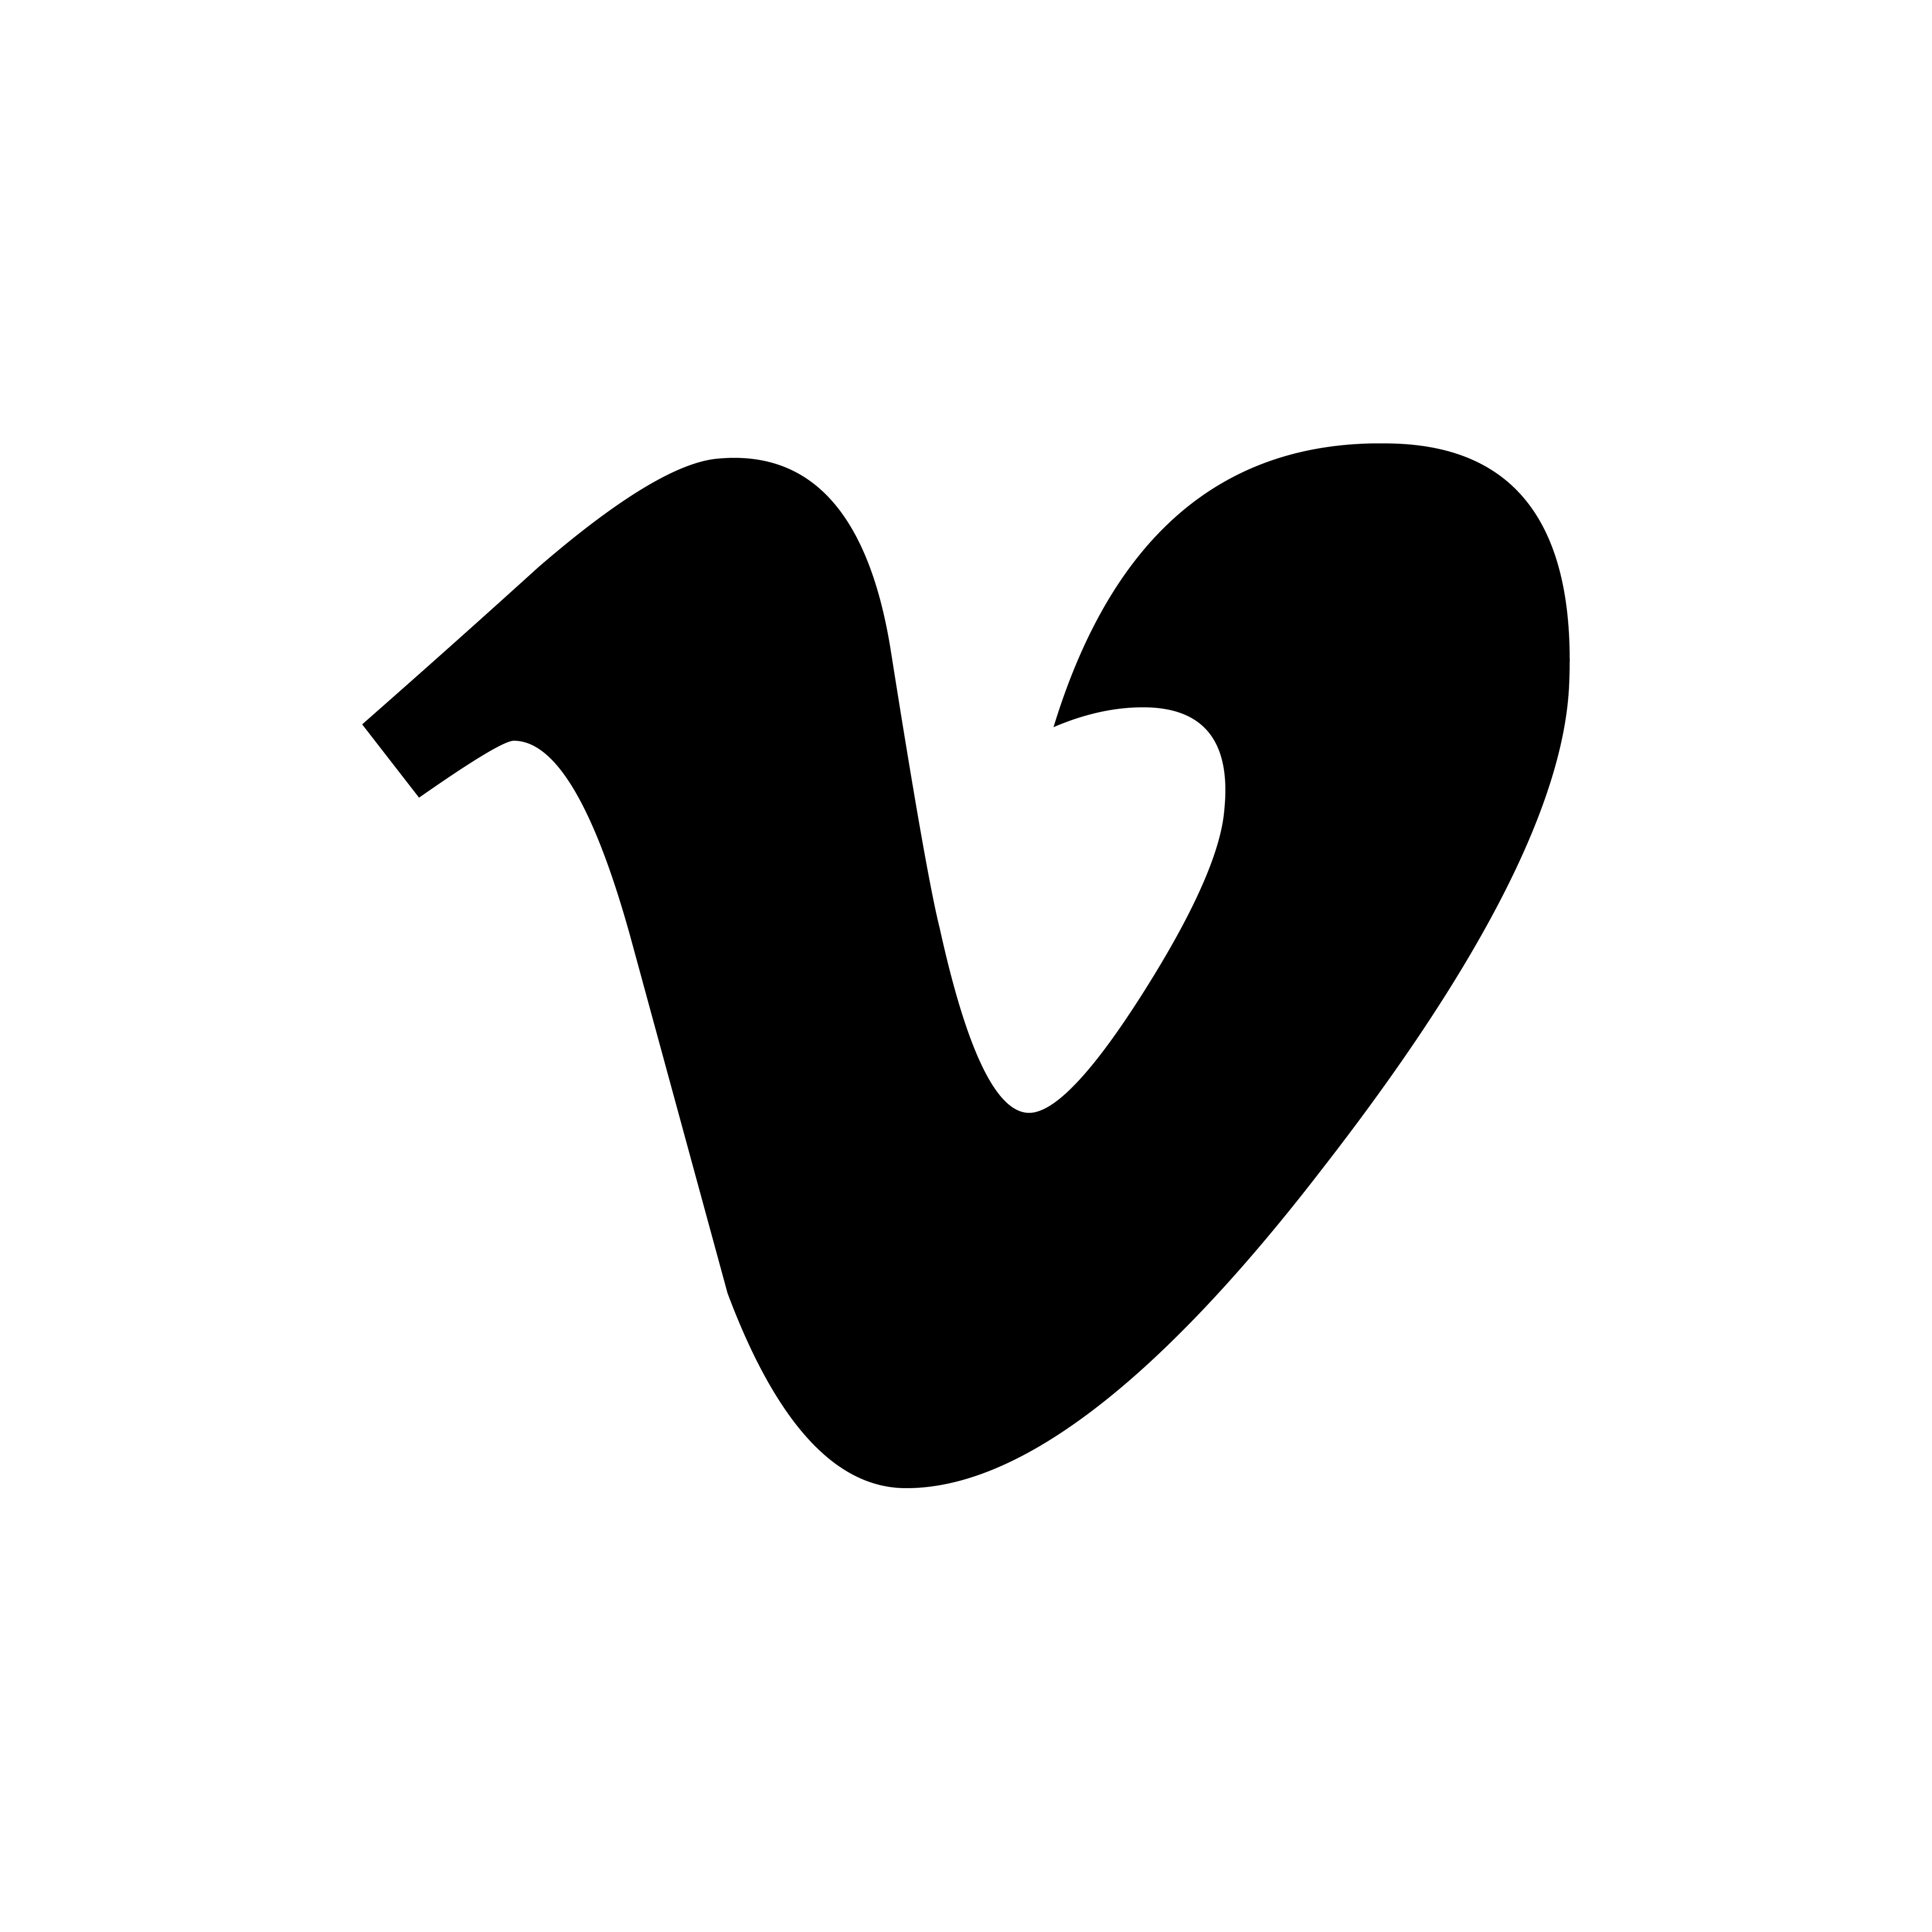 Vimeo logo white inside a black square - Free logo icons